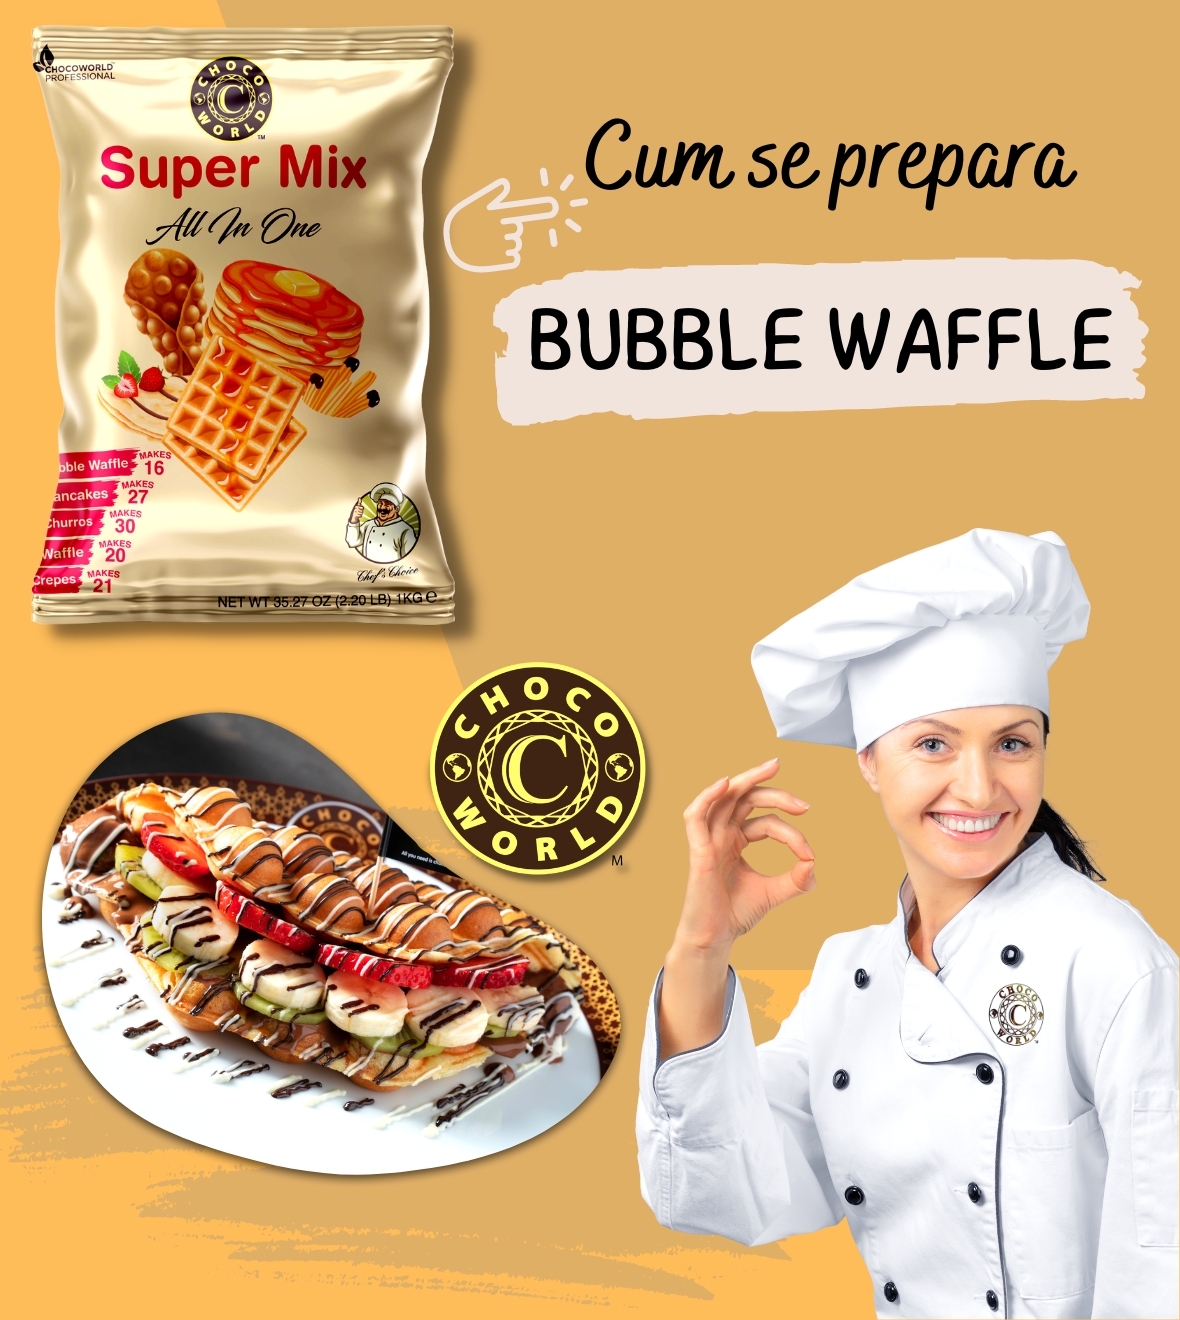 Cum se prepara bubble waffle